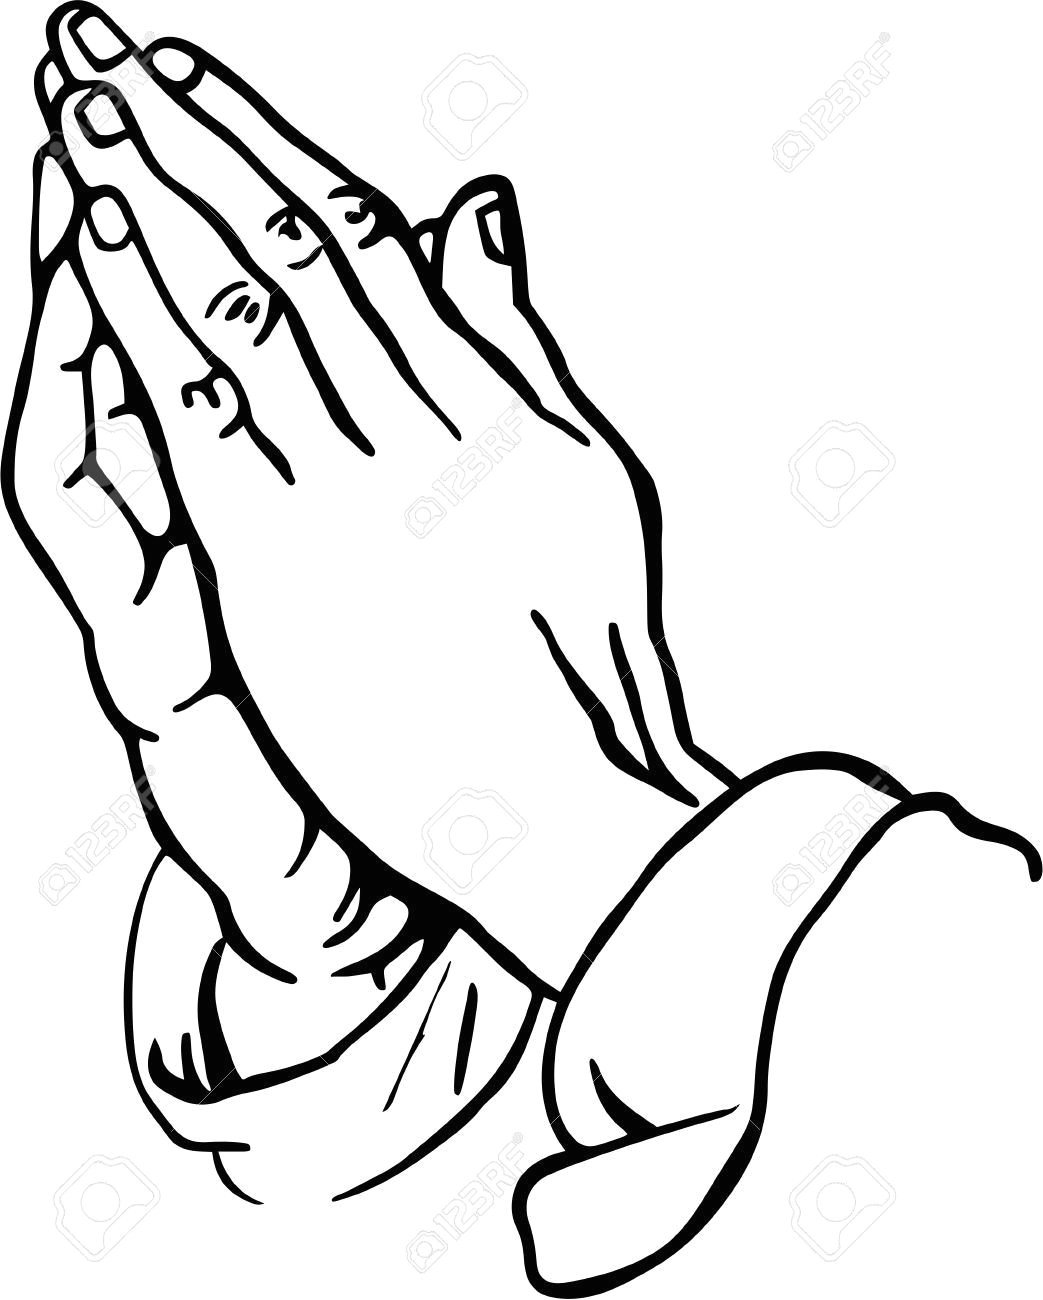 Drawing Of A Girl Praying Praying Hands Clipart Craft Ideas Pinterest Praying Hands